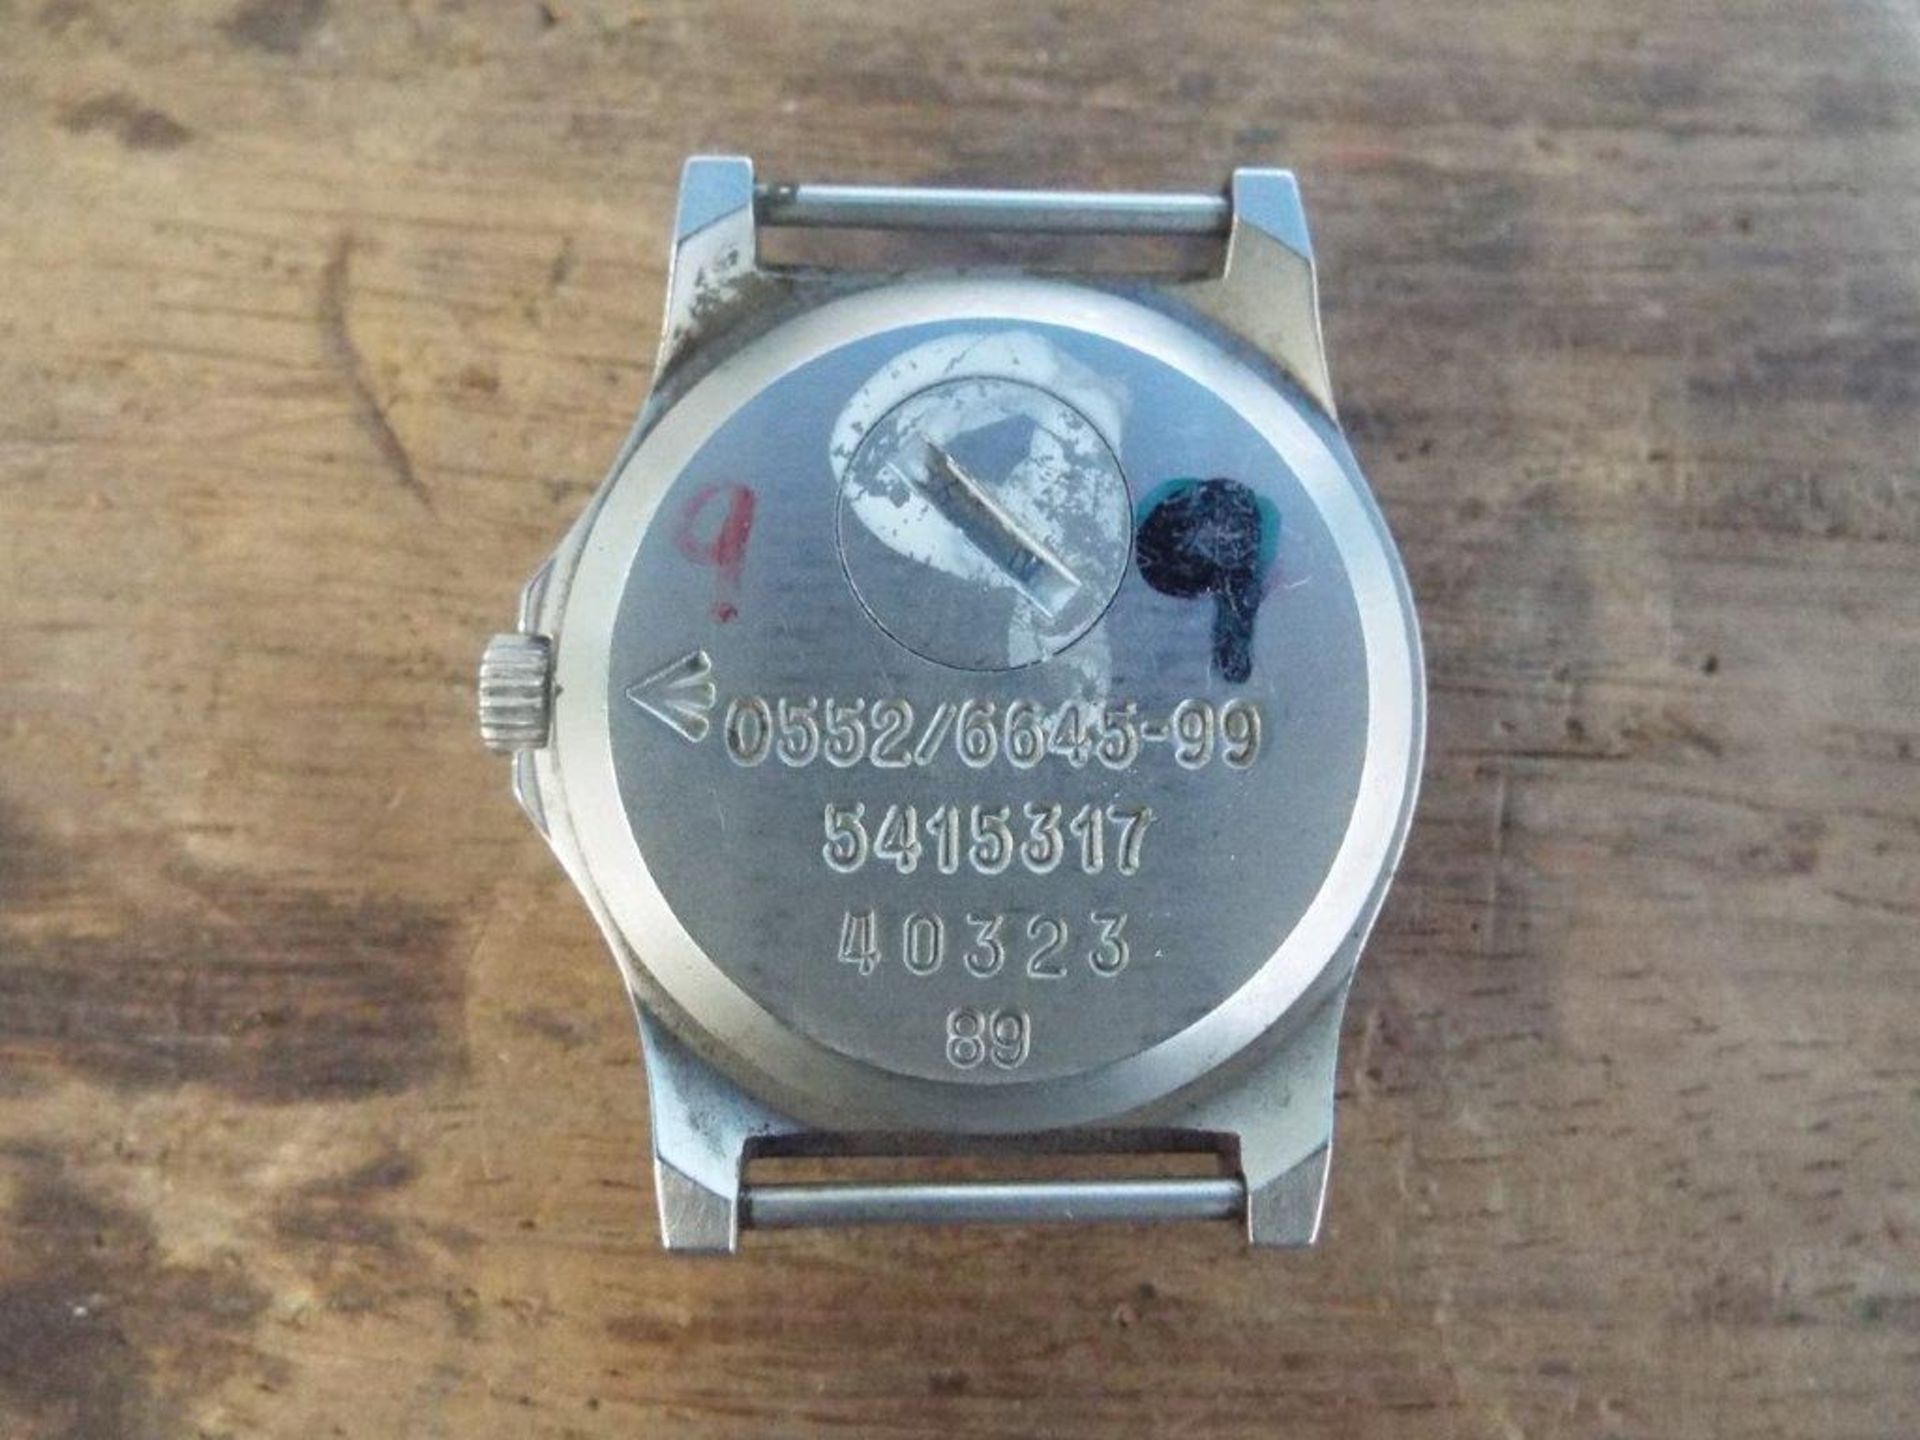 Genuine British Army CWC Quartz Wrist Watch - Image 4 of 5